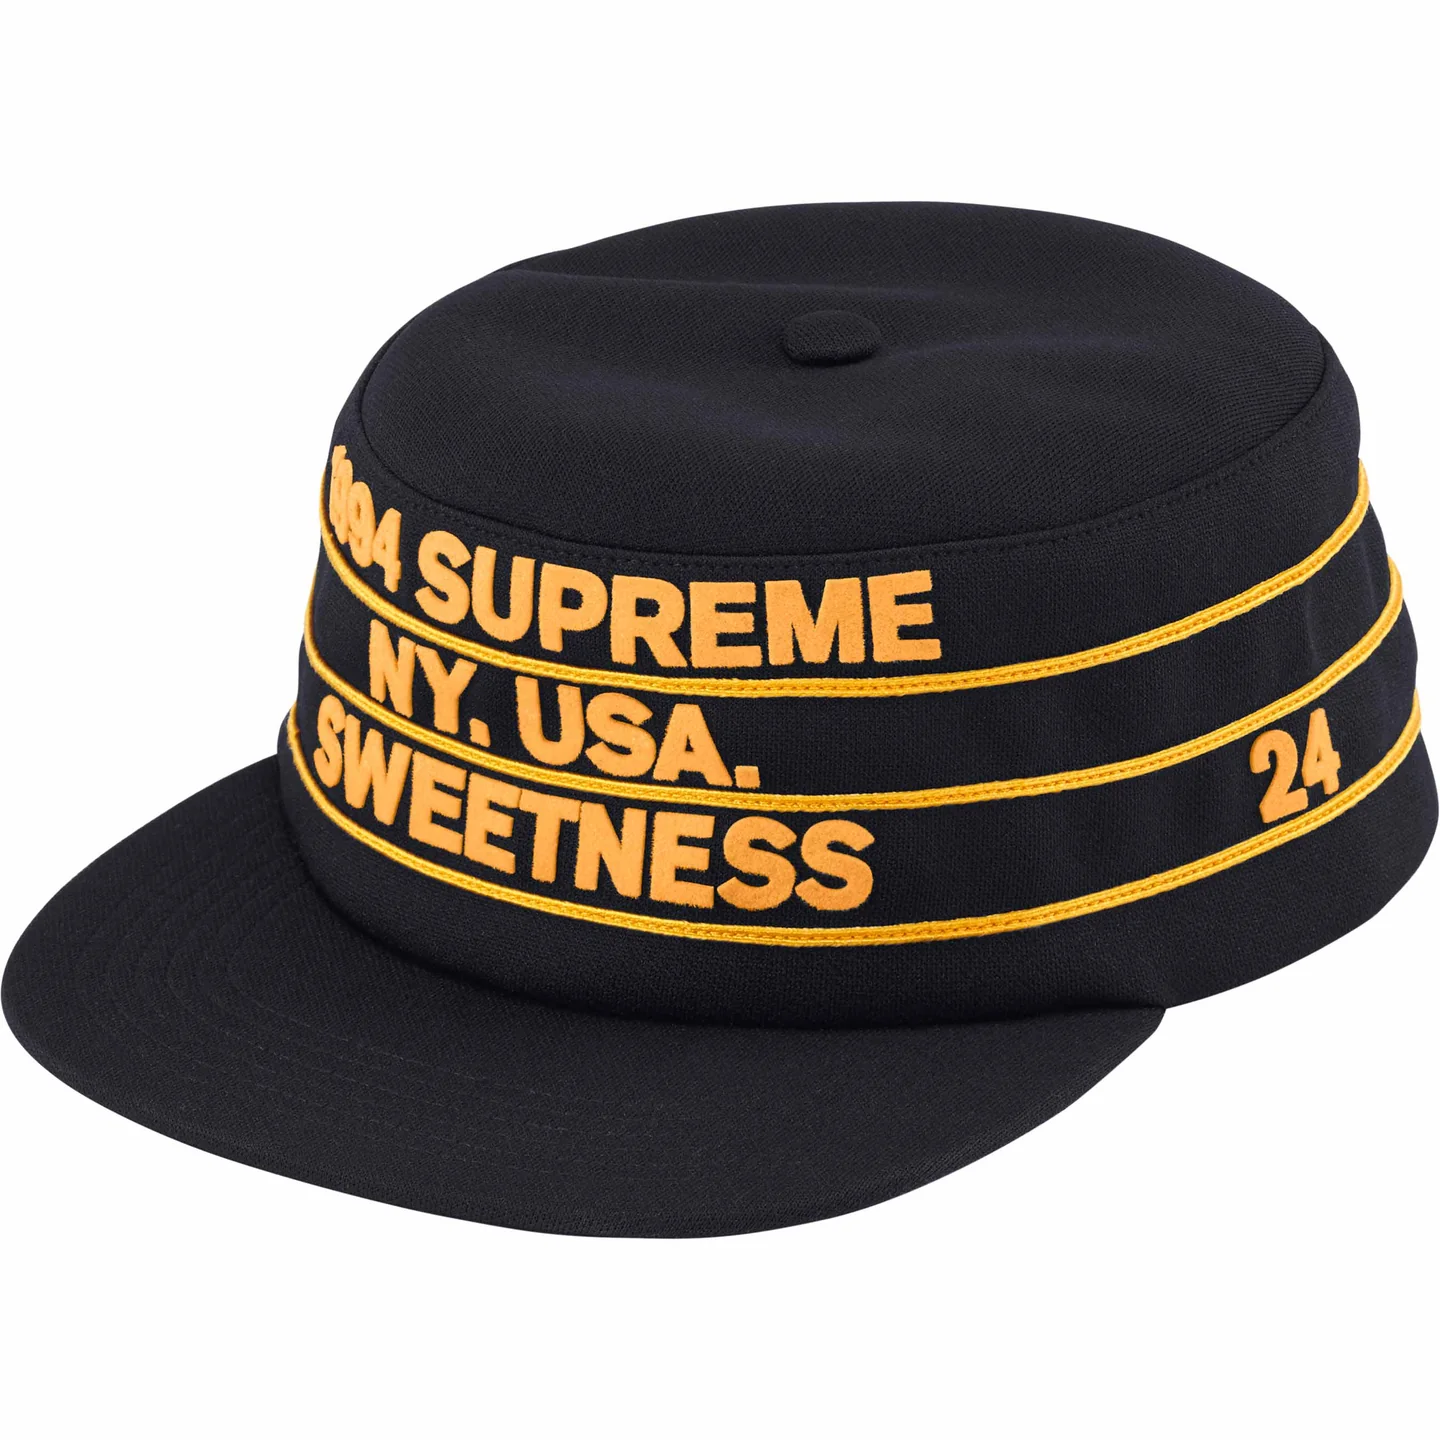 Supreme Pro Bowl Pillbox Hat